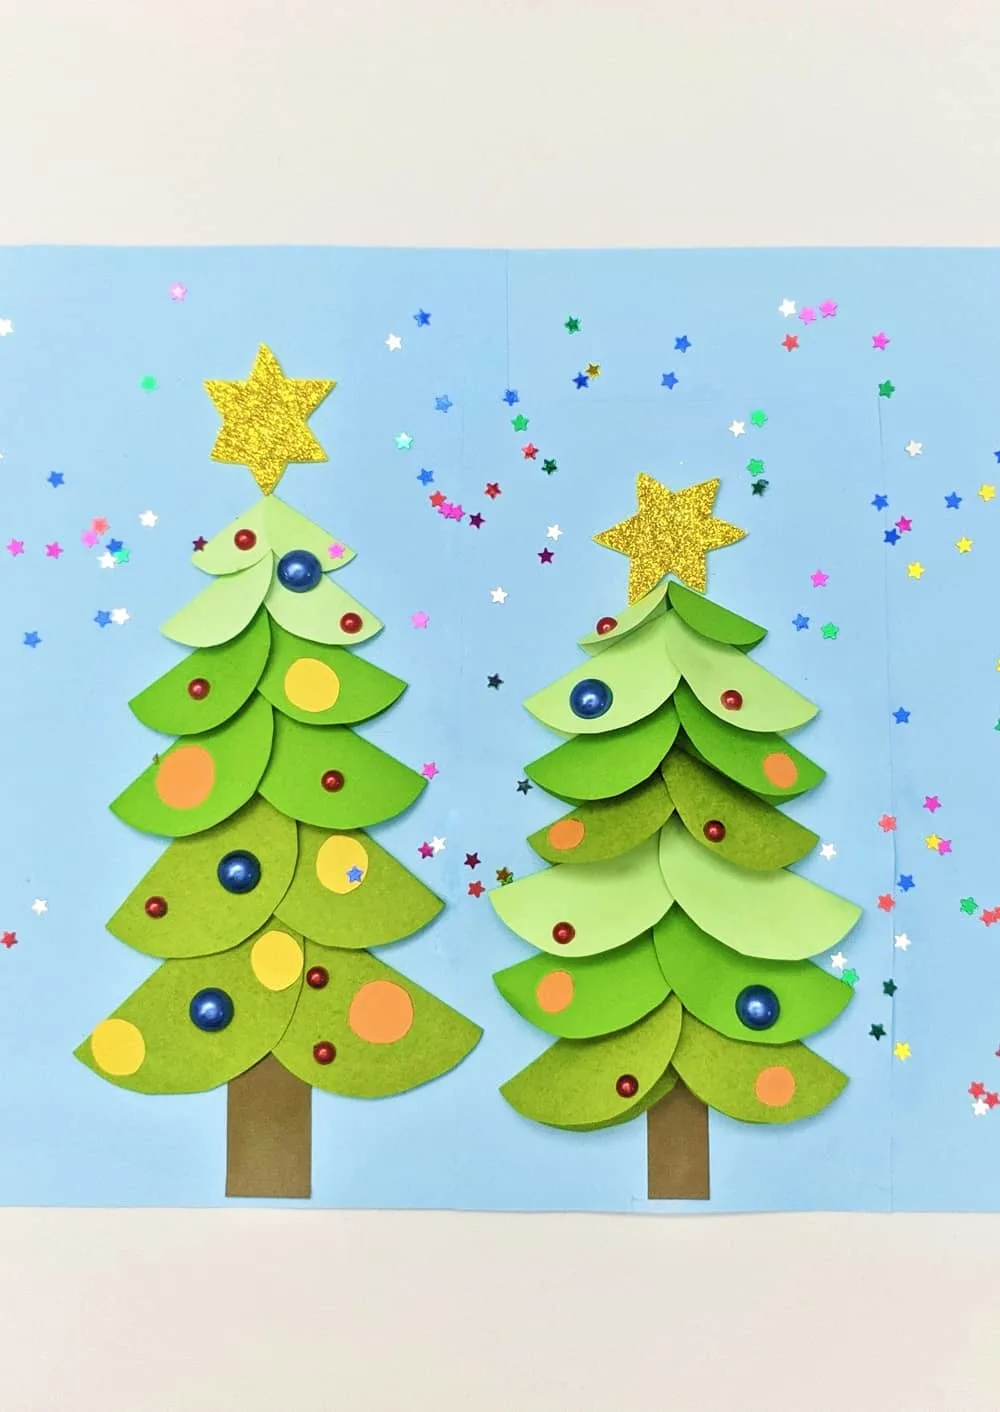 Paper Christmas Tree Craft